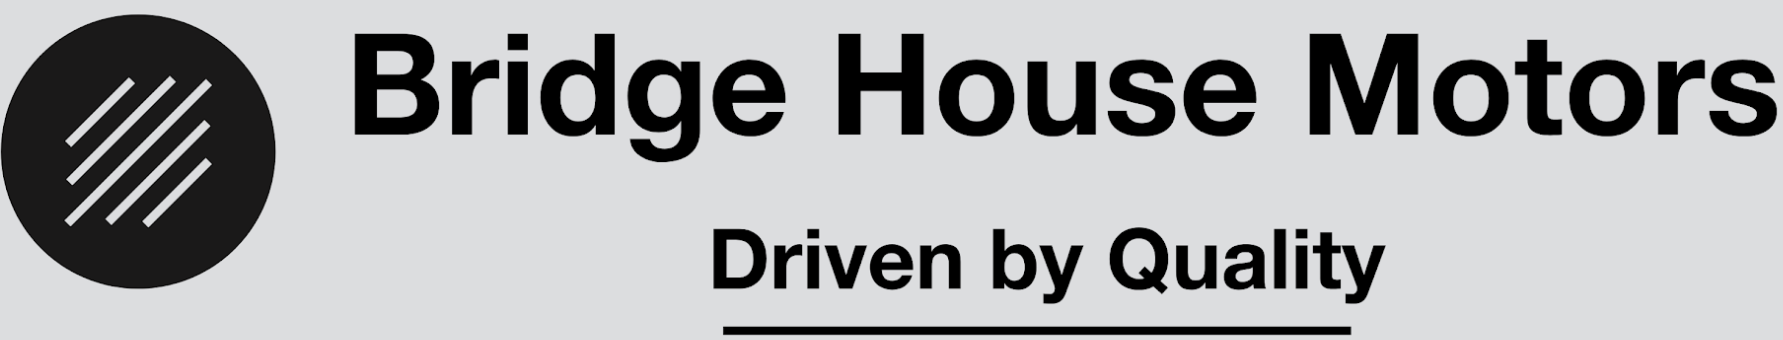 Bridge House Motors Logo